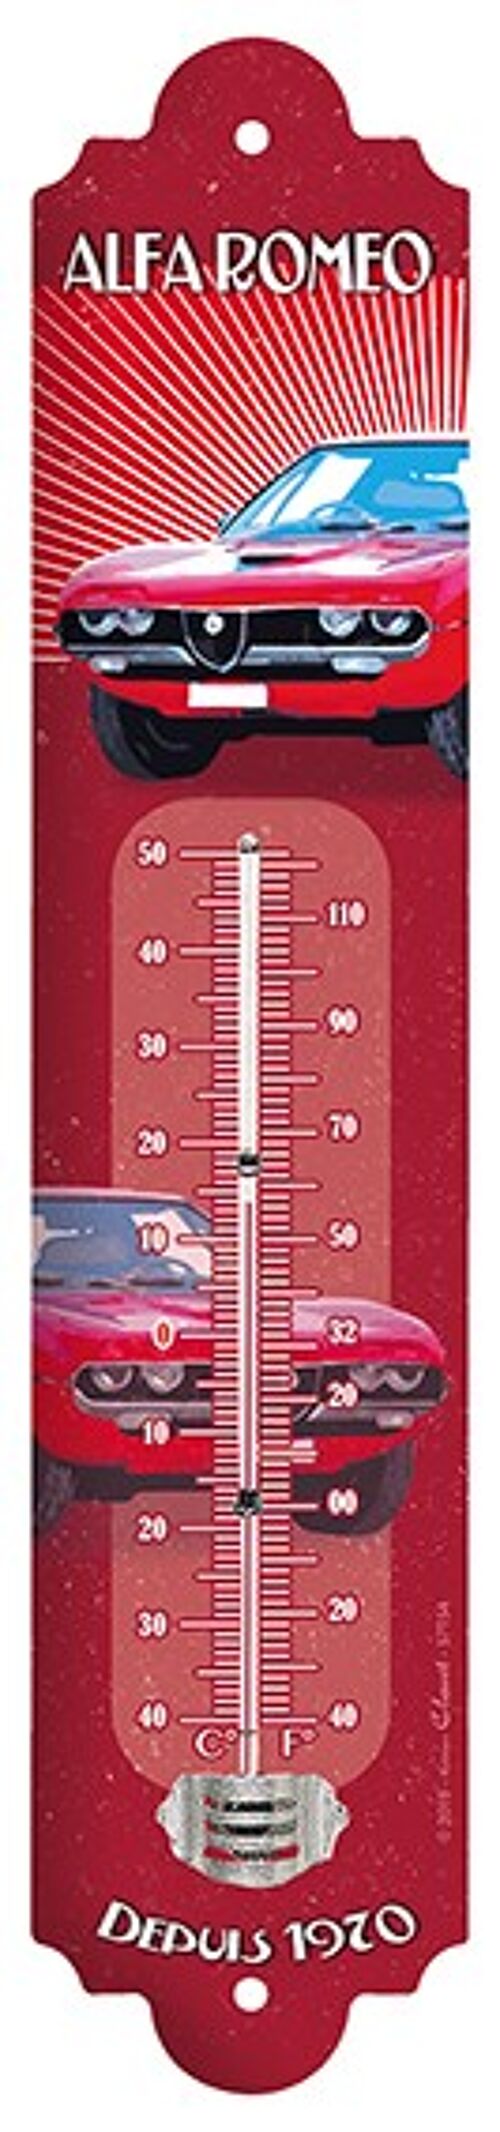 Thermomètre Vintage Alfa romeo thermo petit modele